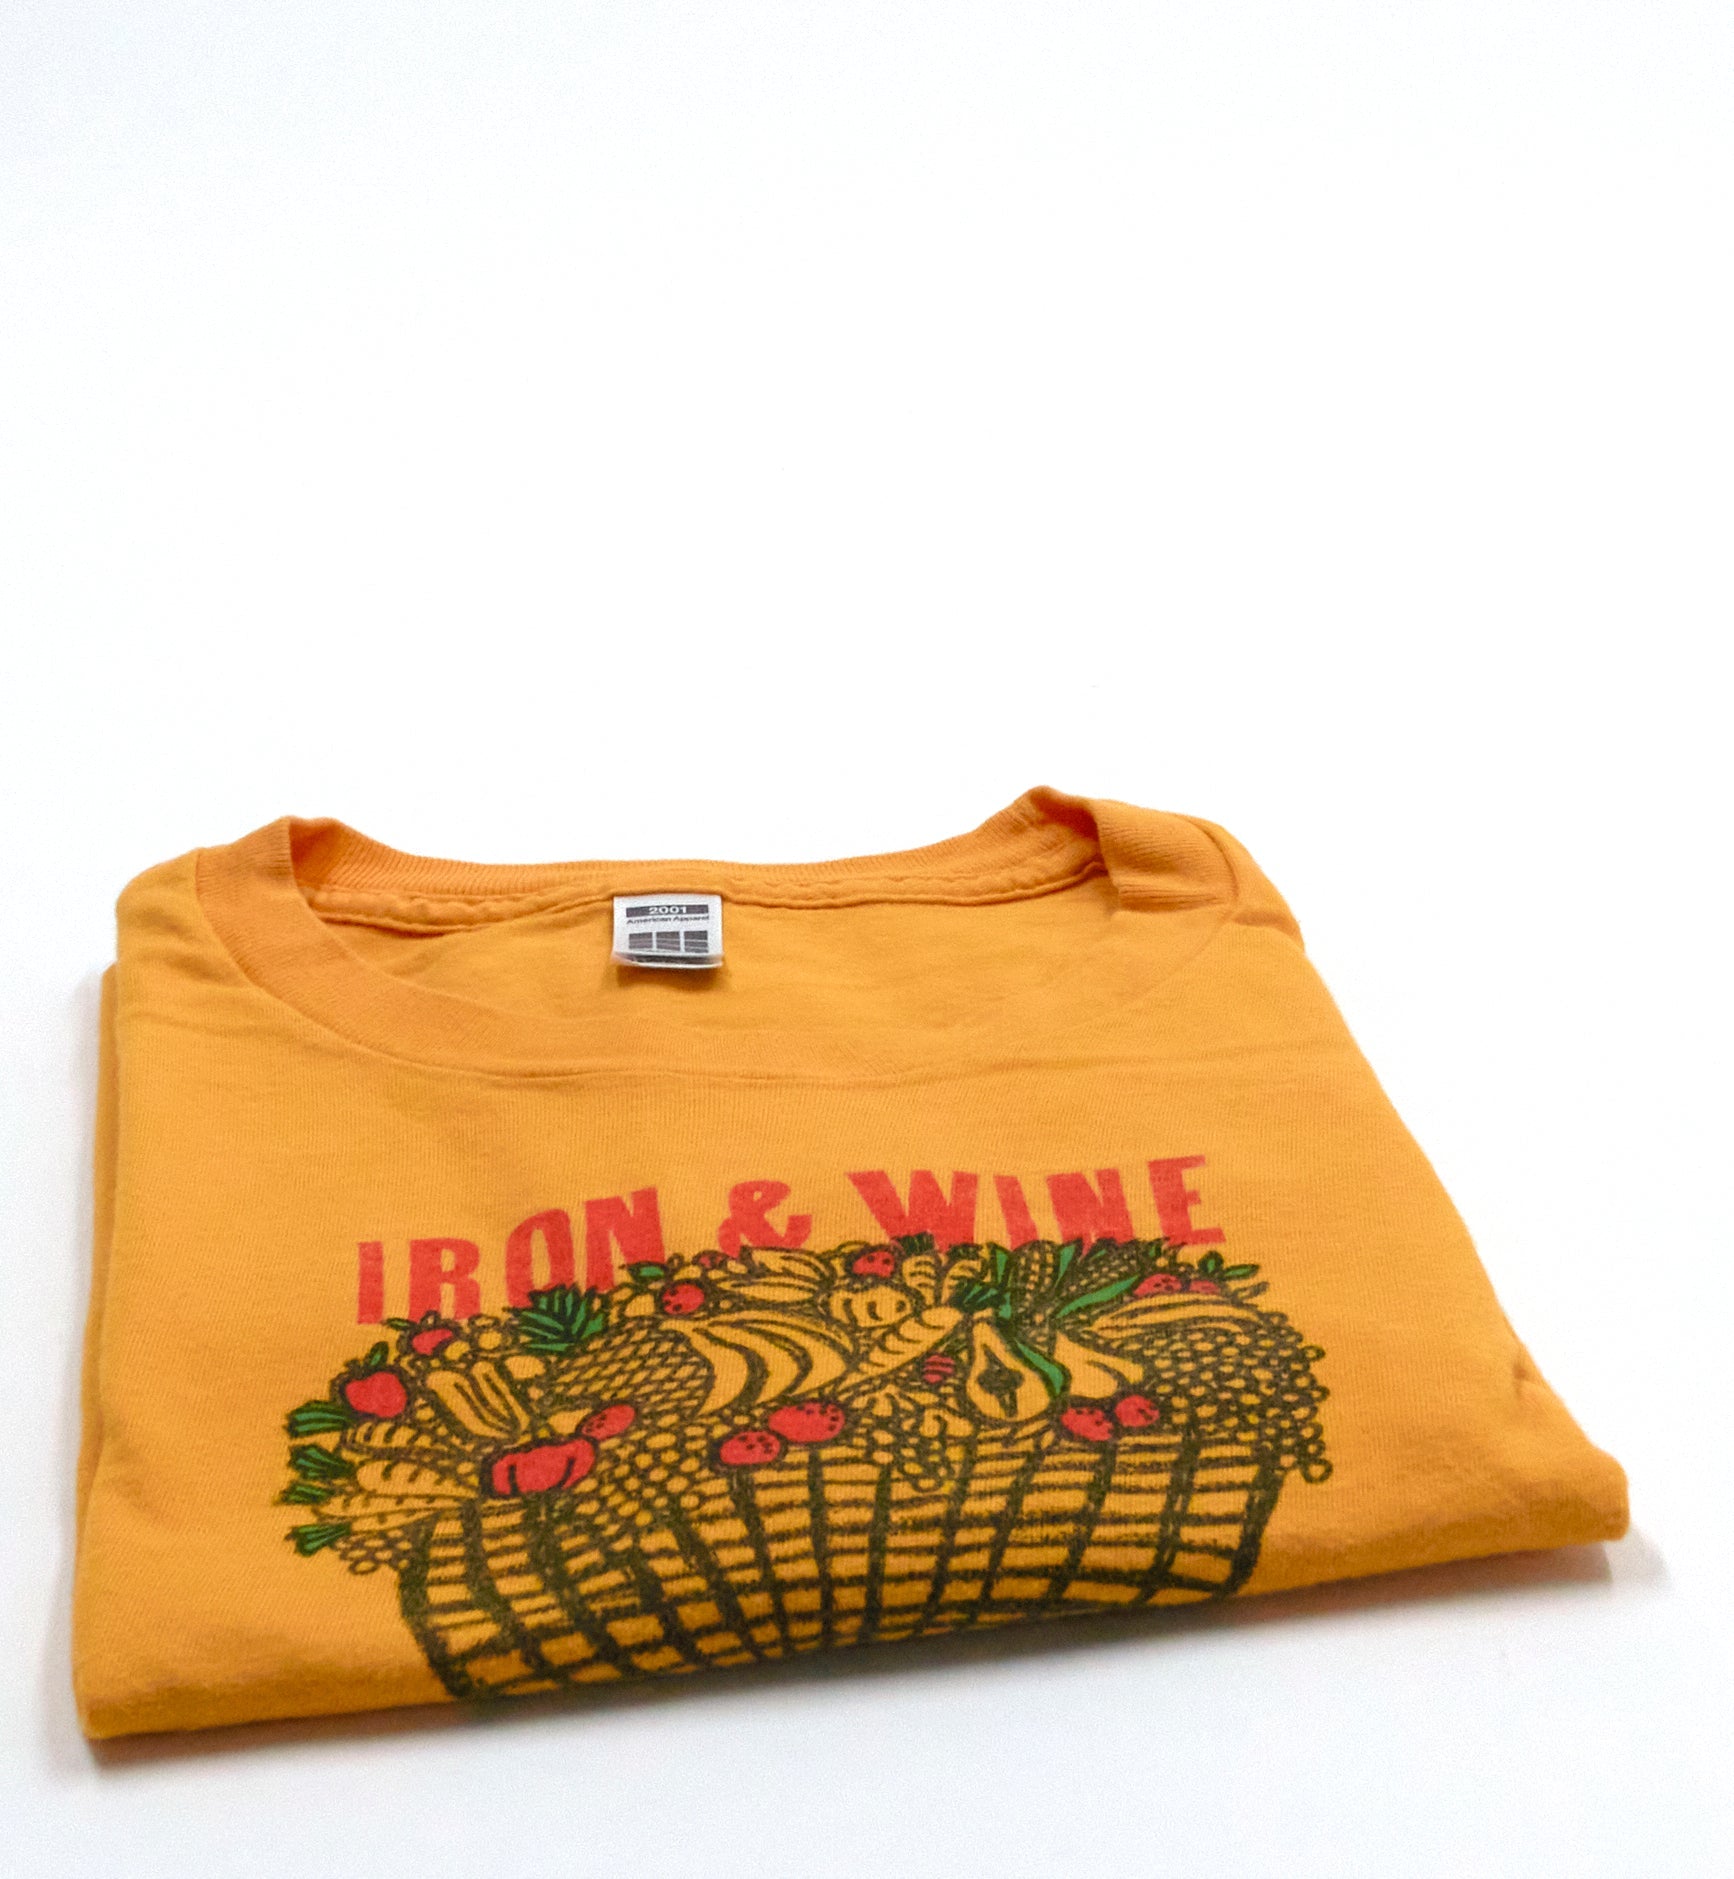 Iron & Wine - Woman King 2005 Tour Shirt Size Small